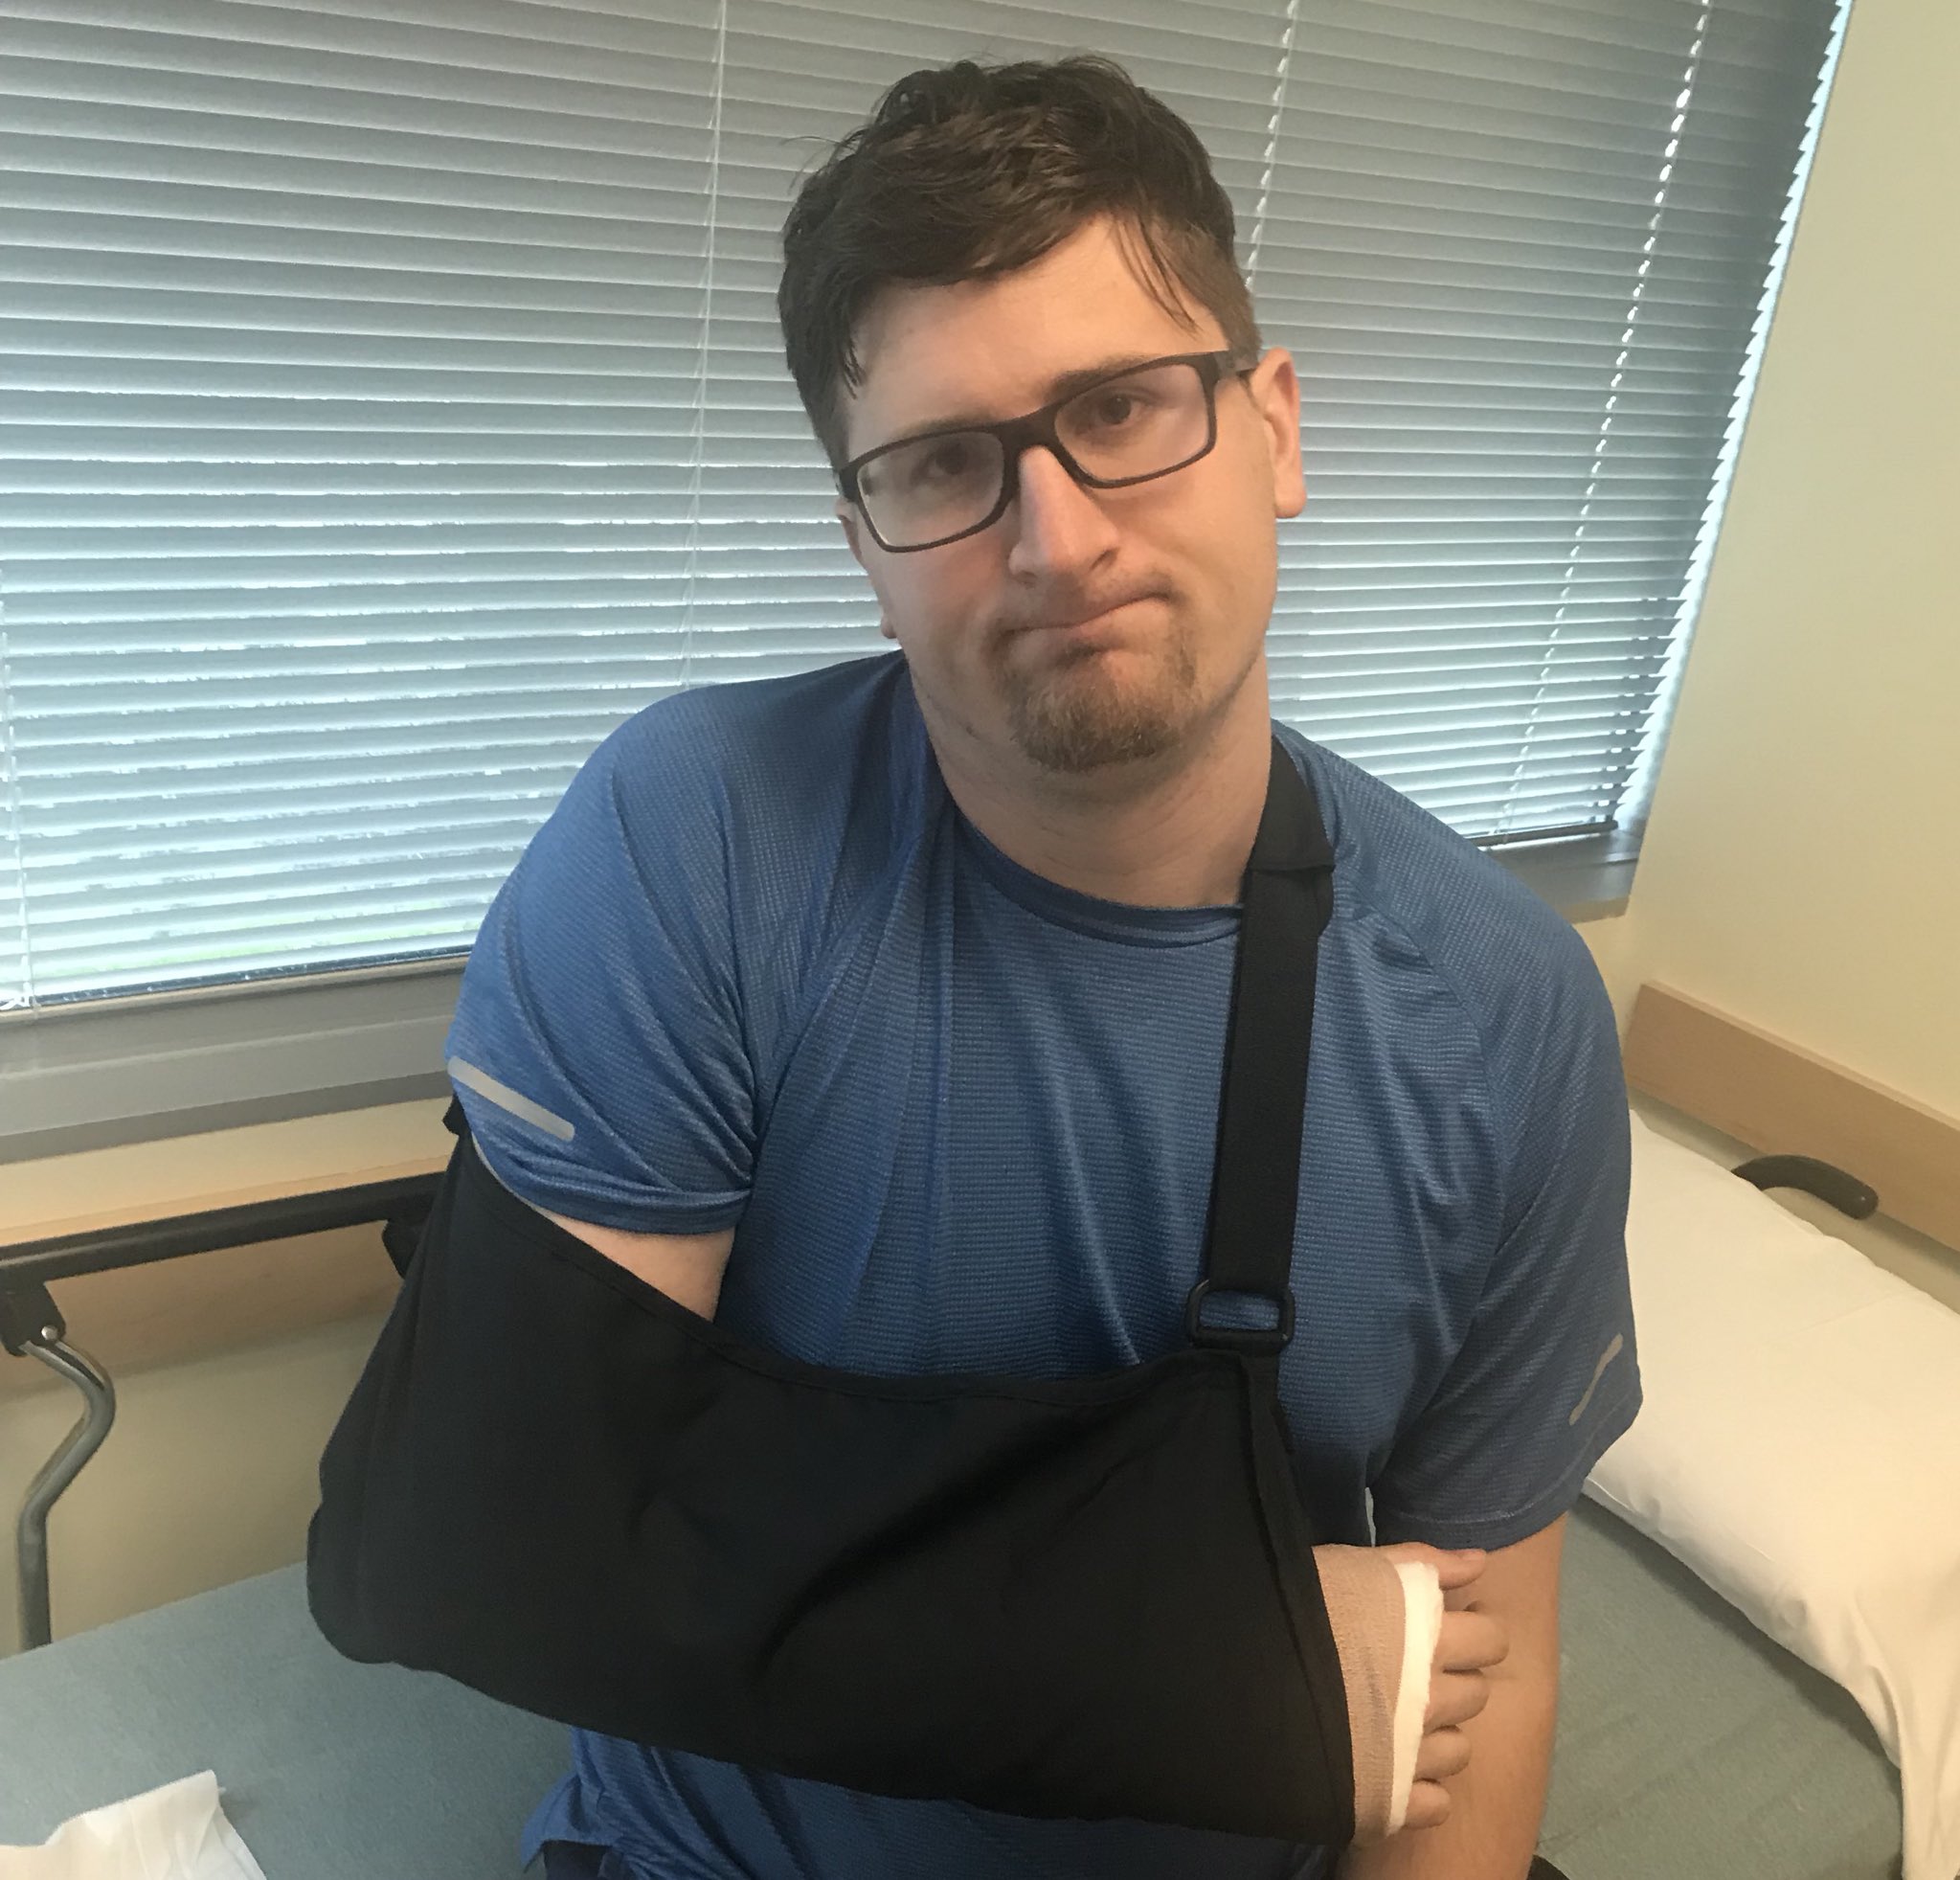 Joshua Wittenkeller on Twitter "Destroyed my elbow in a Basketball